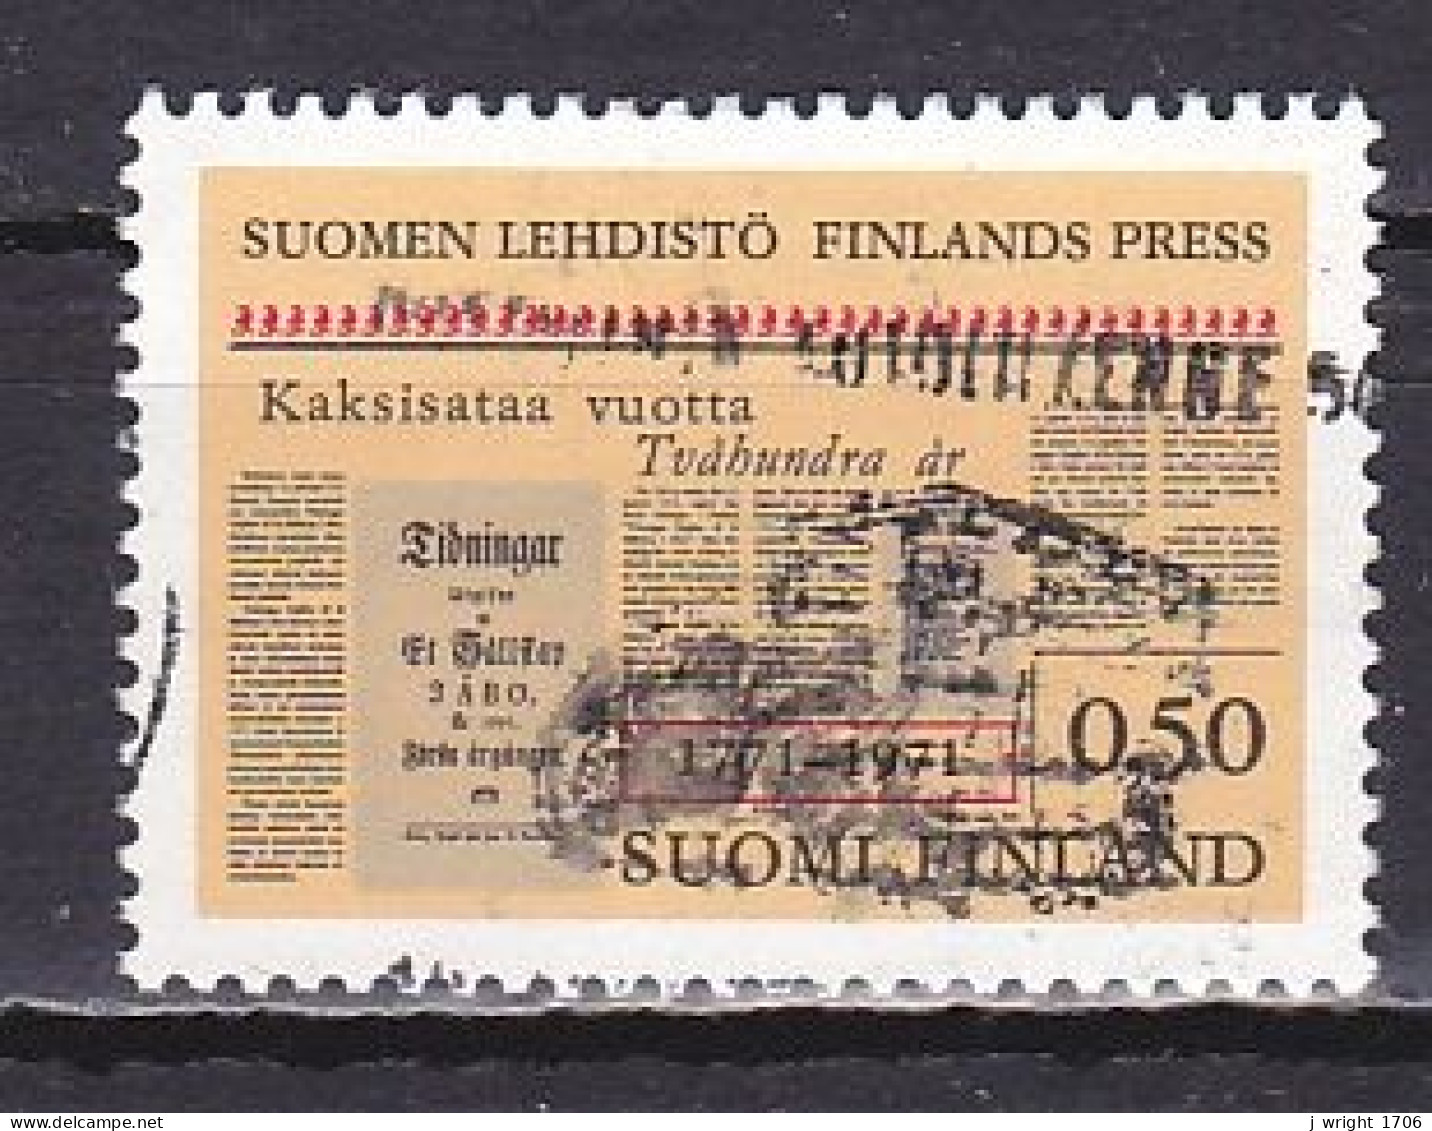 Finland, 1971, Finnish Press 200th Anniv, 0.50mk, USED - Gebruikt